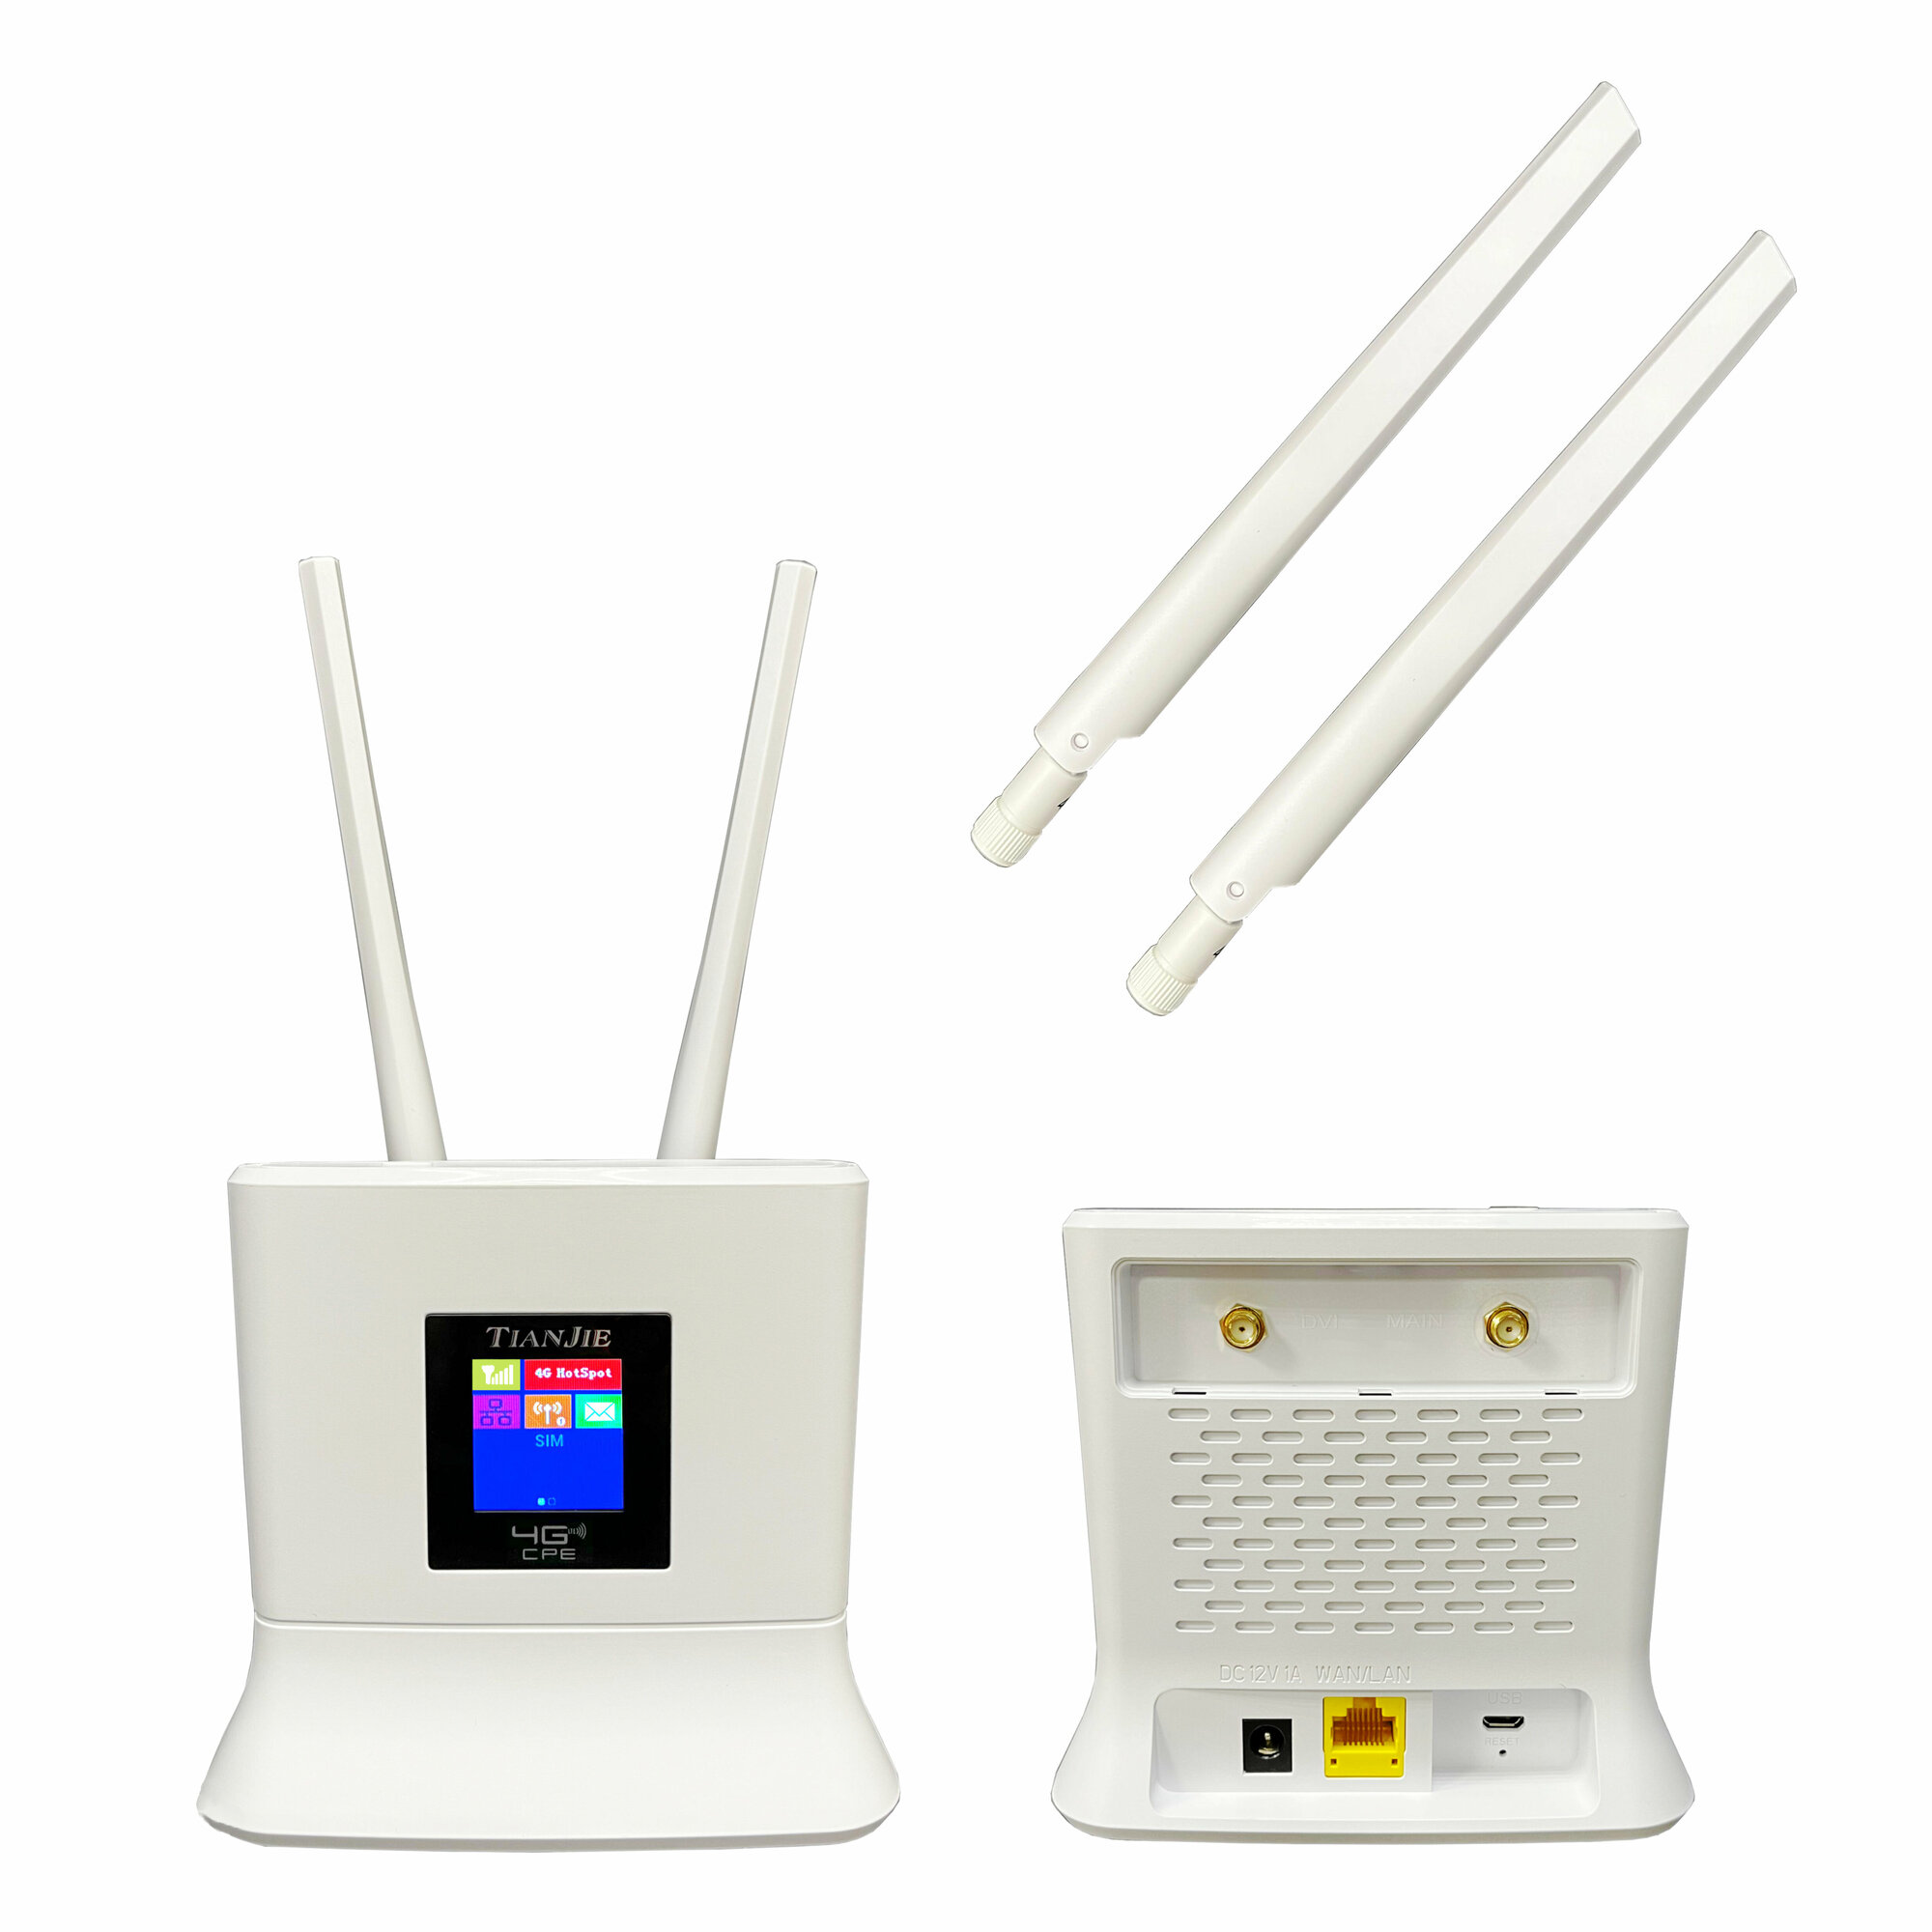 Wi-Fi роутер TianJie СPE 906-3 любой оператор и тариф смена IMEI дисплей LCD съёмные антенны sma male